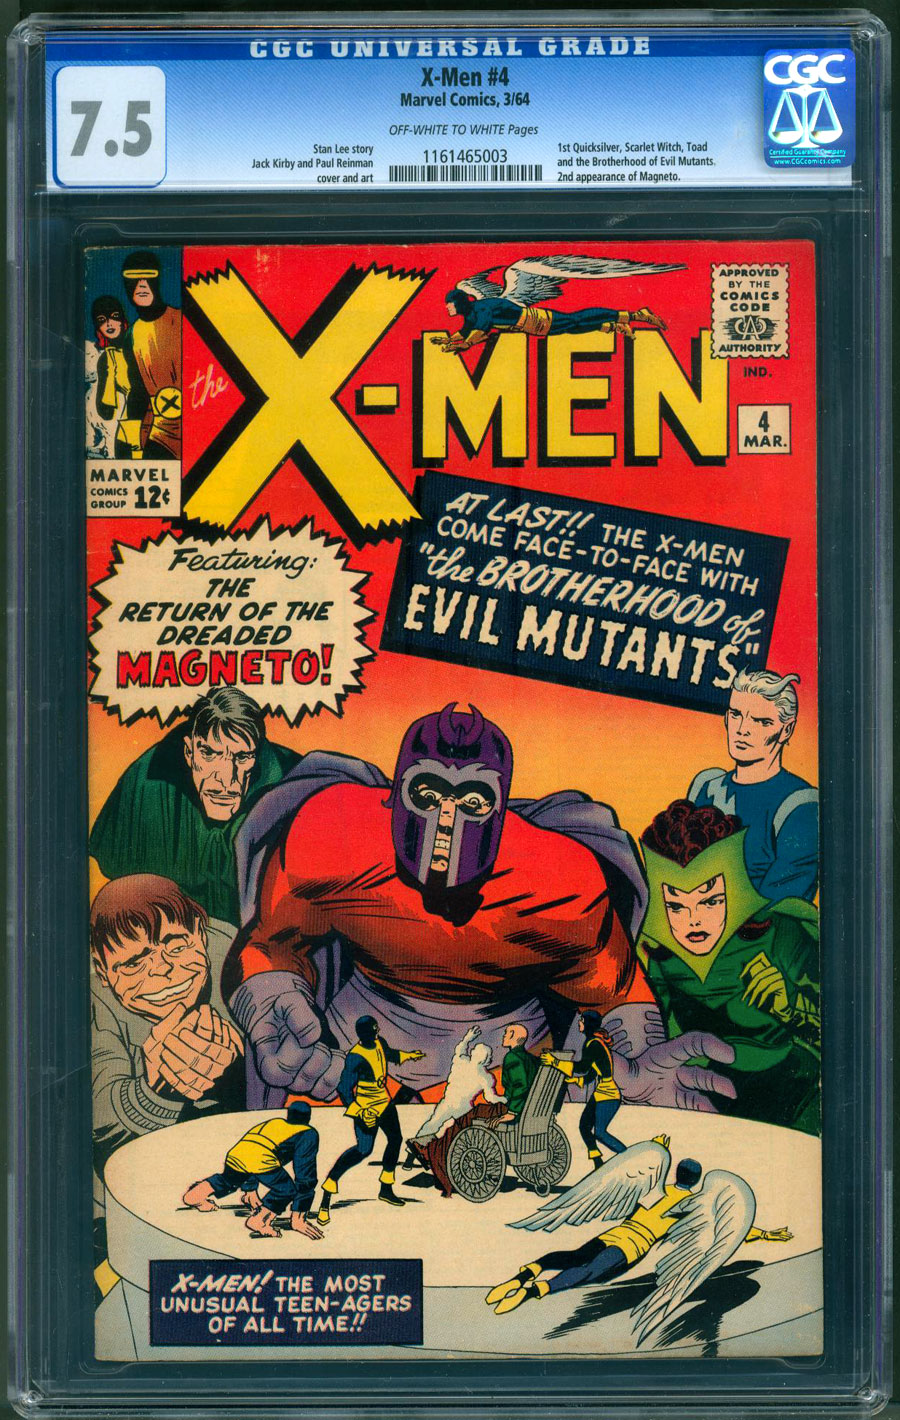 ComicConnect - X-MEN (1963-2011) #4 - CGC VF-: 7.5